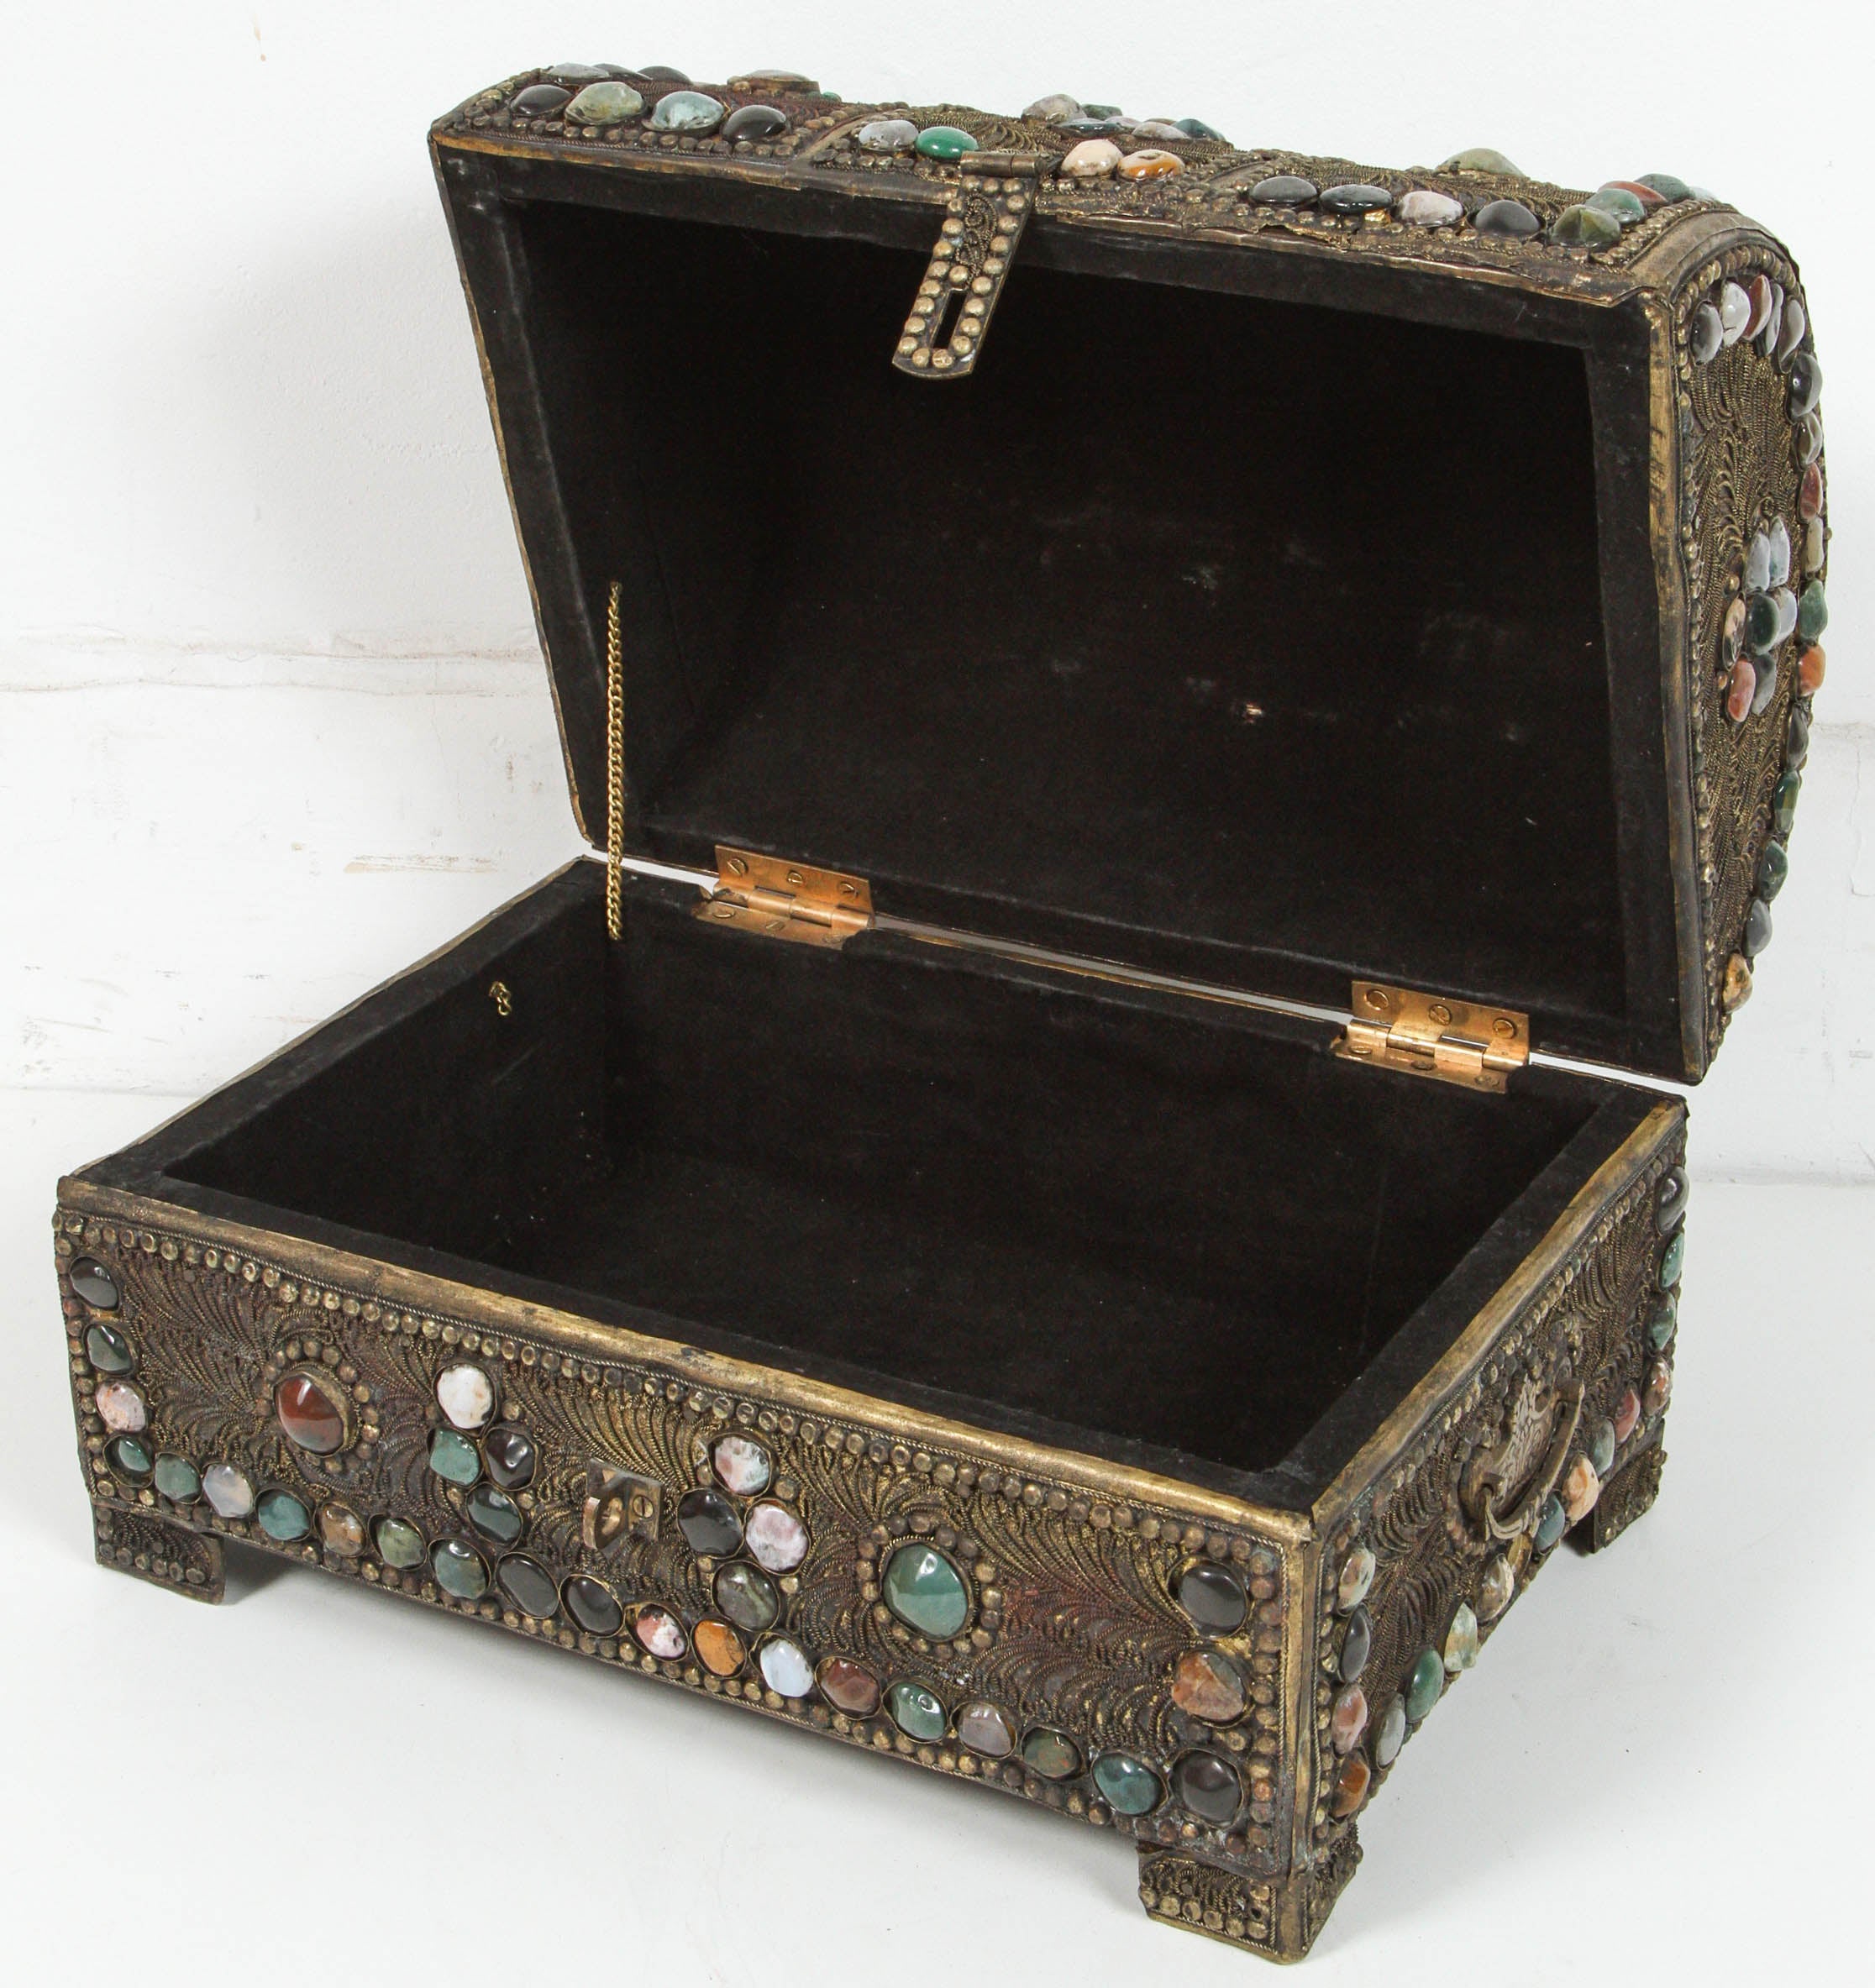 Vintage burl trinket box made in Morocco by Wunderley